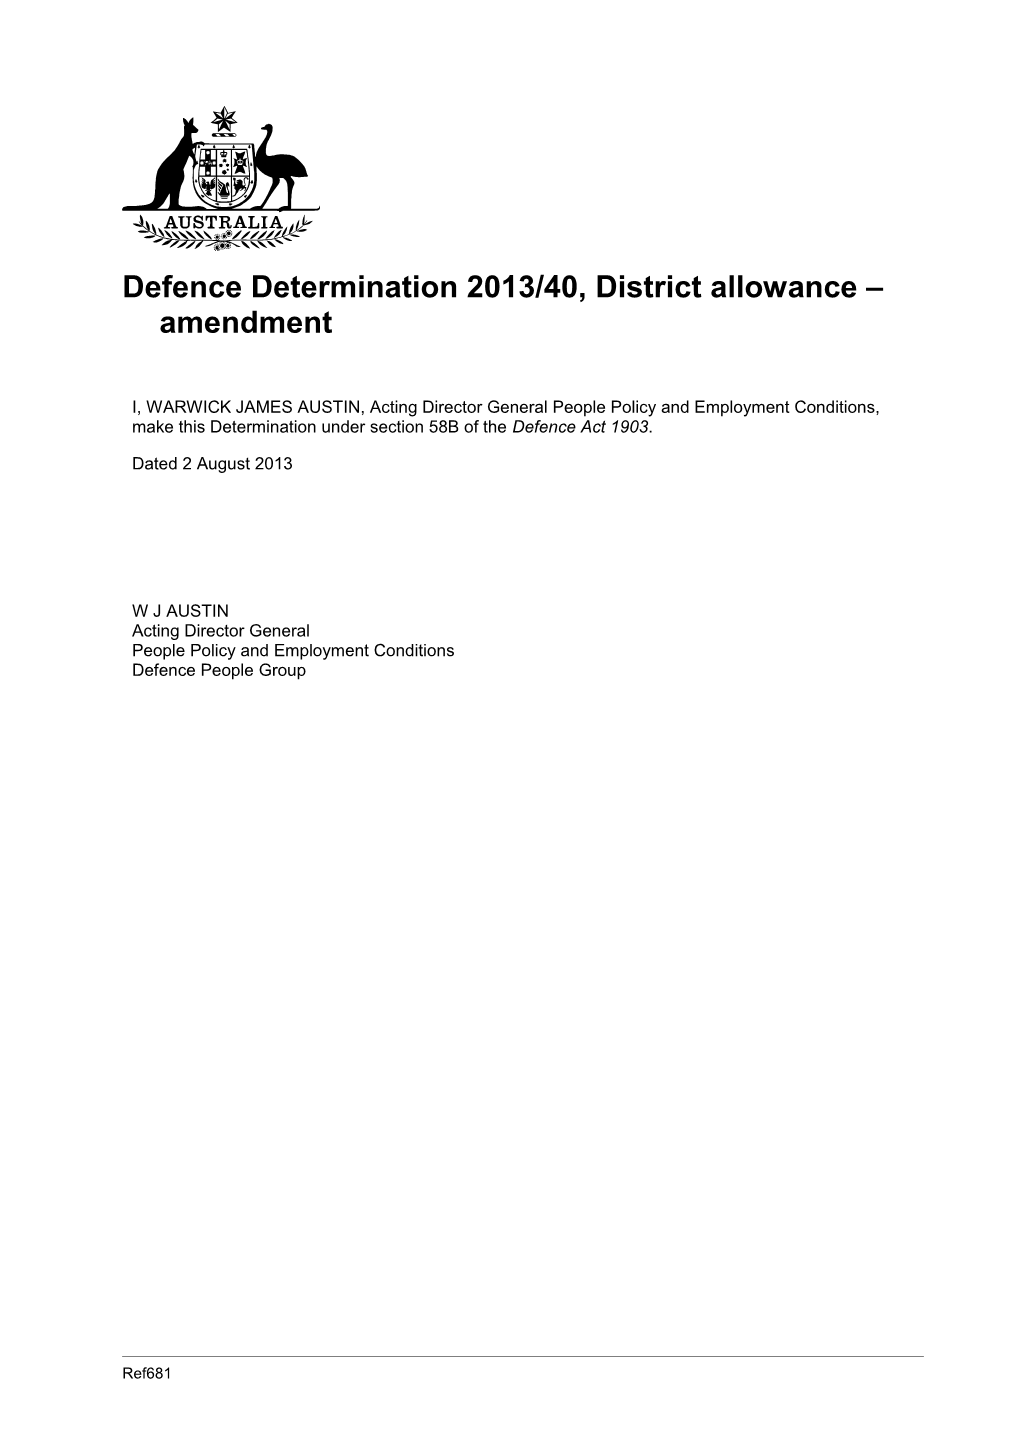 Defence Determination 2013/40, District Allowance Amendment